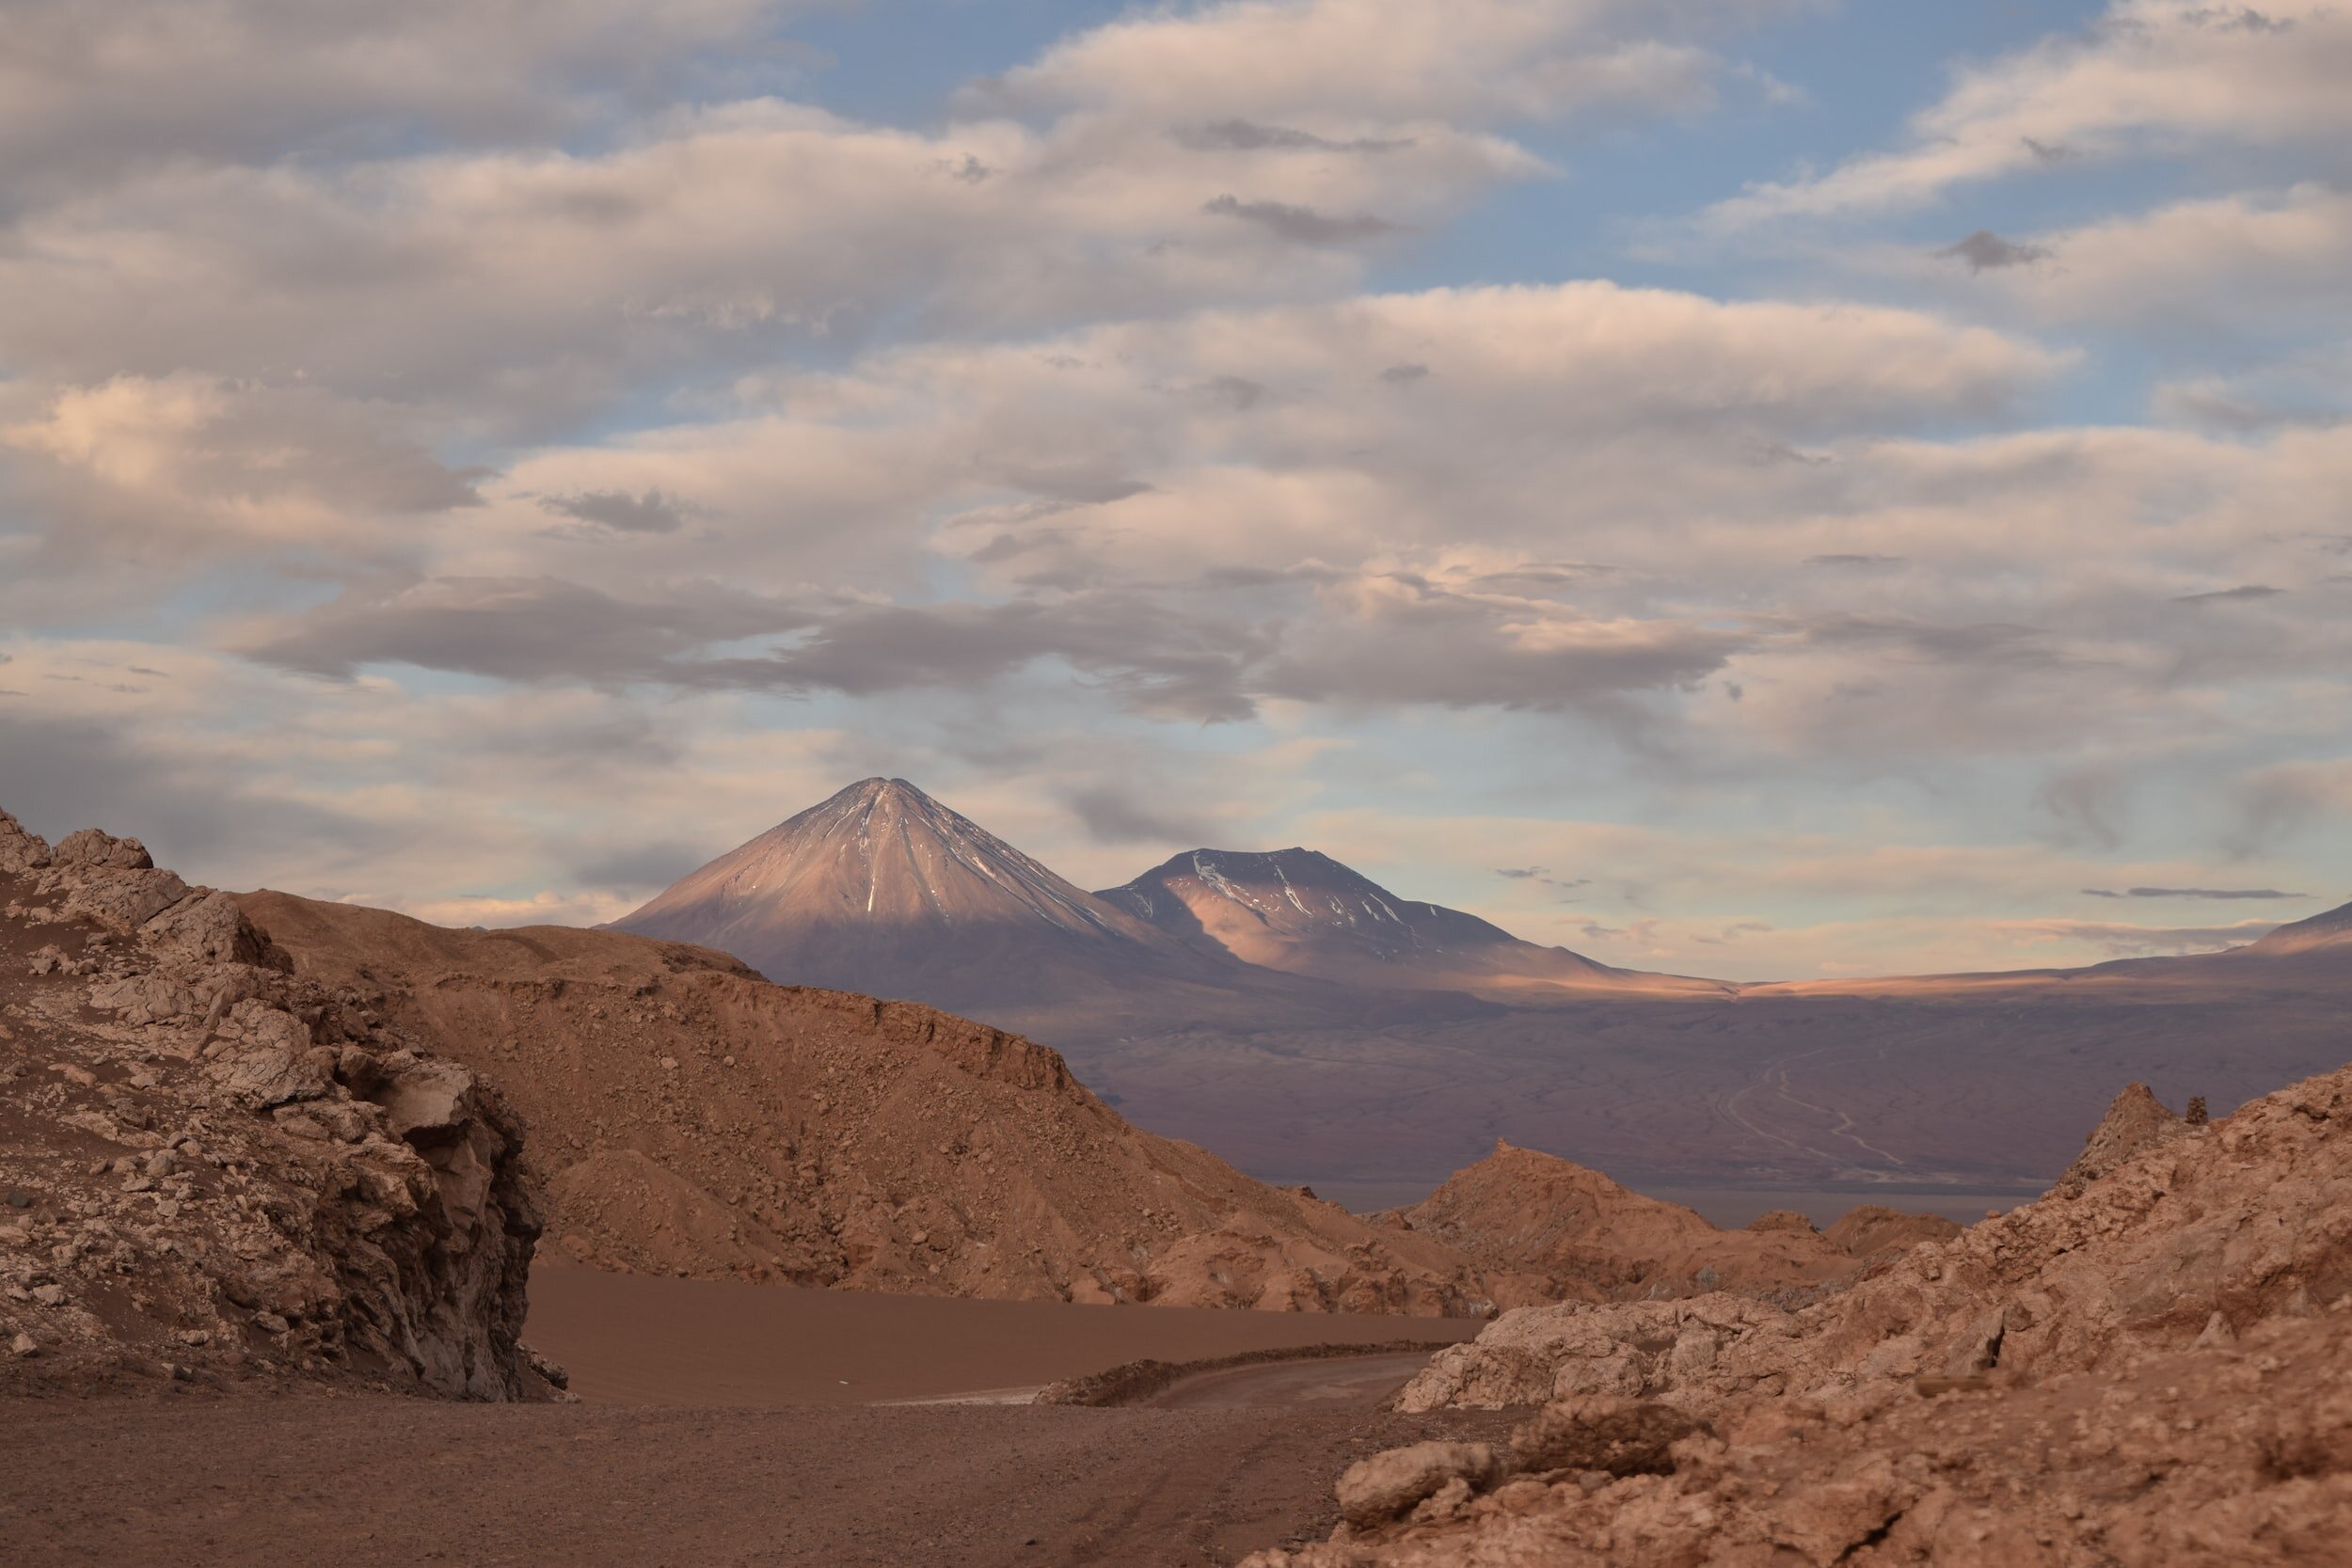 A barren landscape under a cloudy sky in the desert outside of San Pedro de Atacama, with the mighty Licancabur volcano rising in the distance.